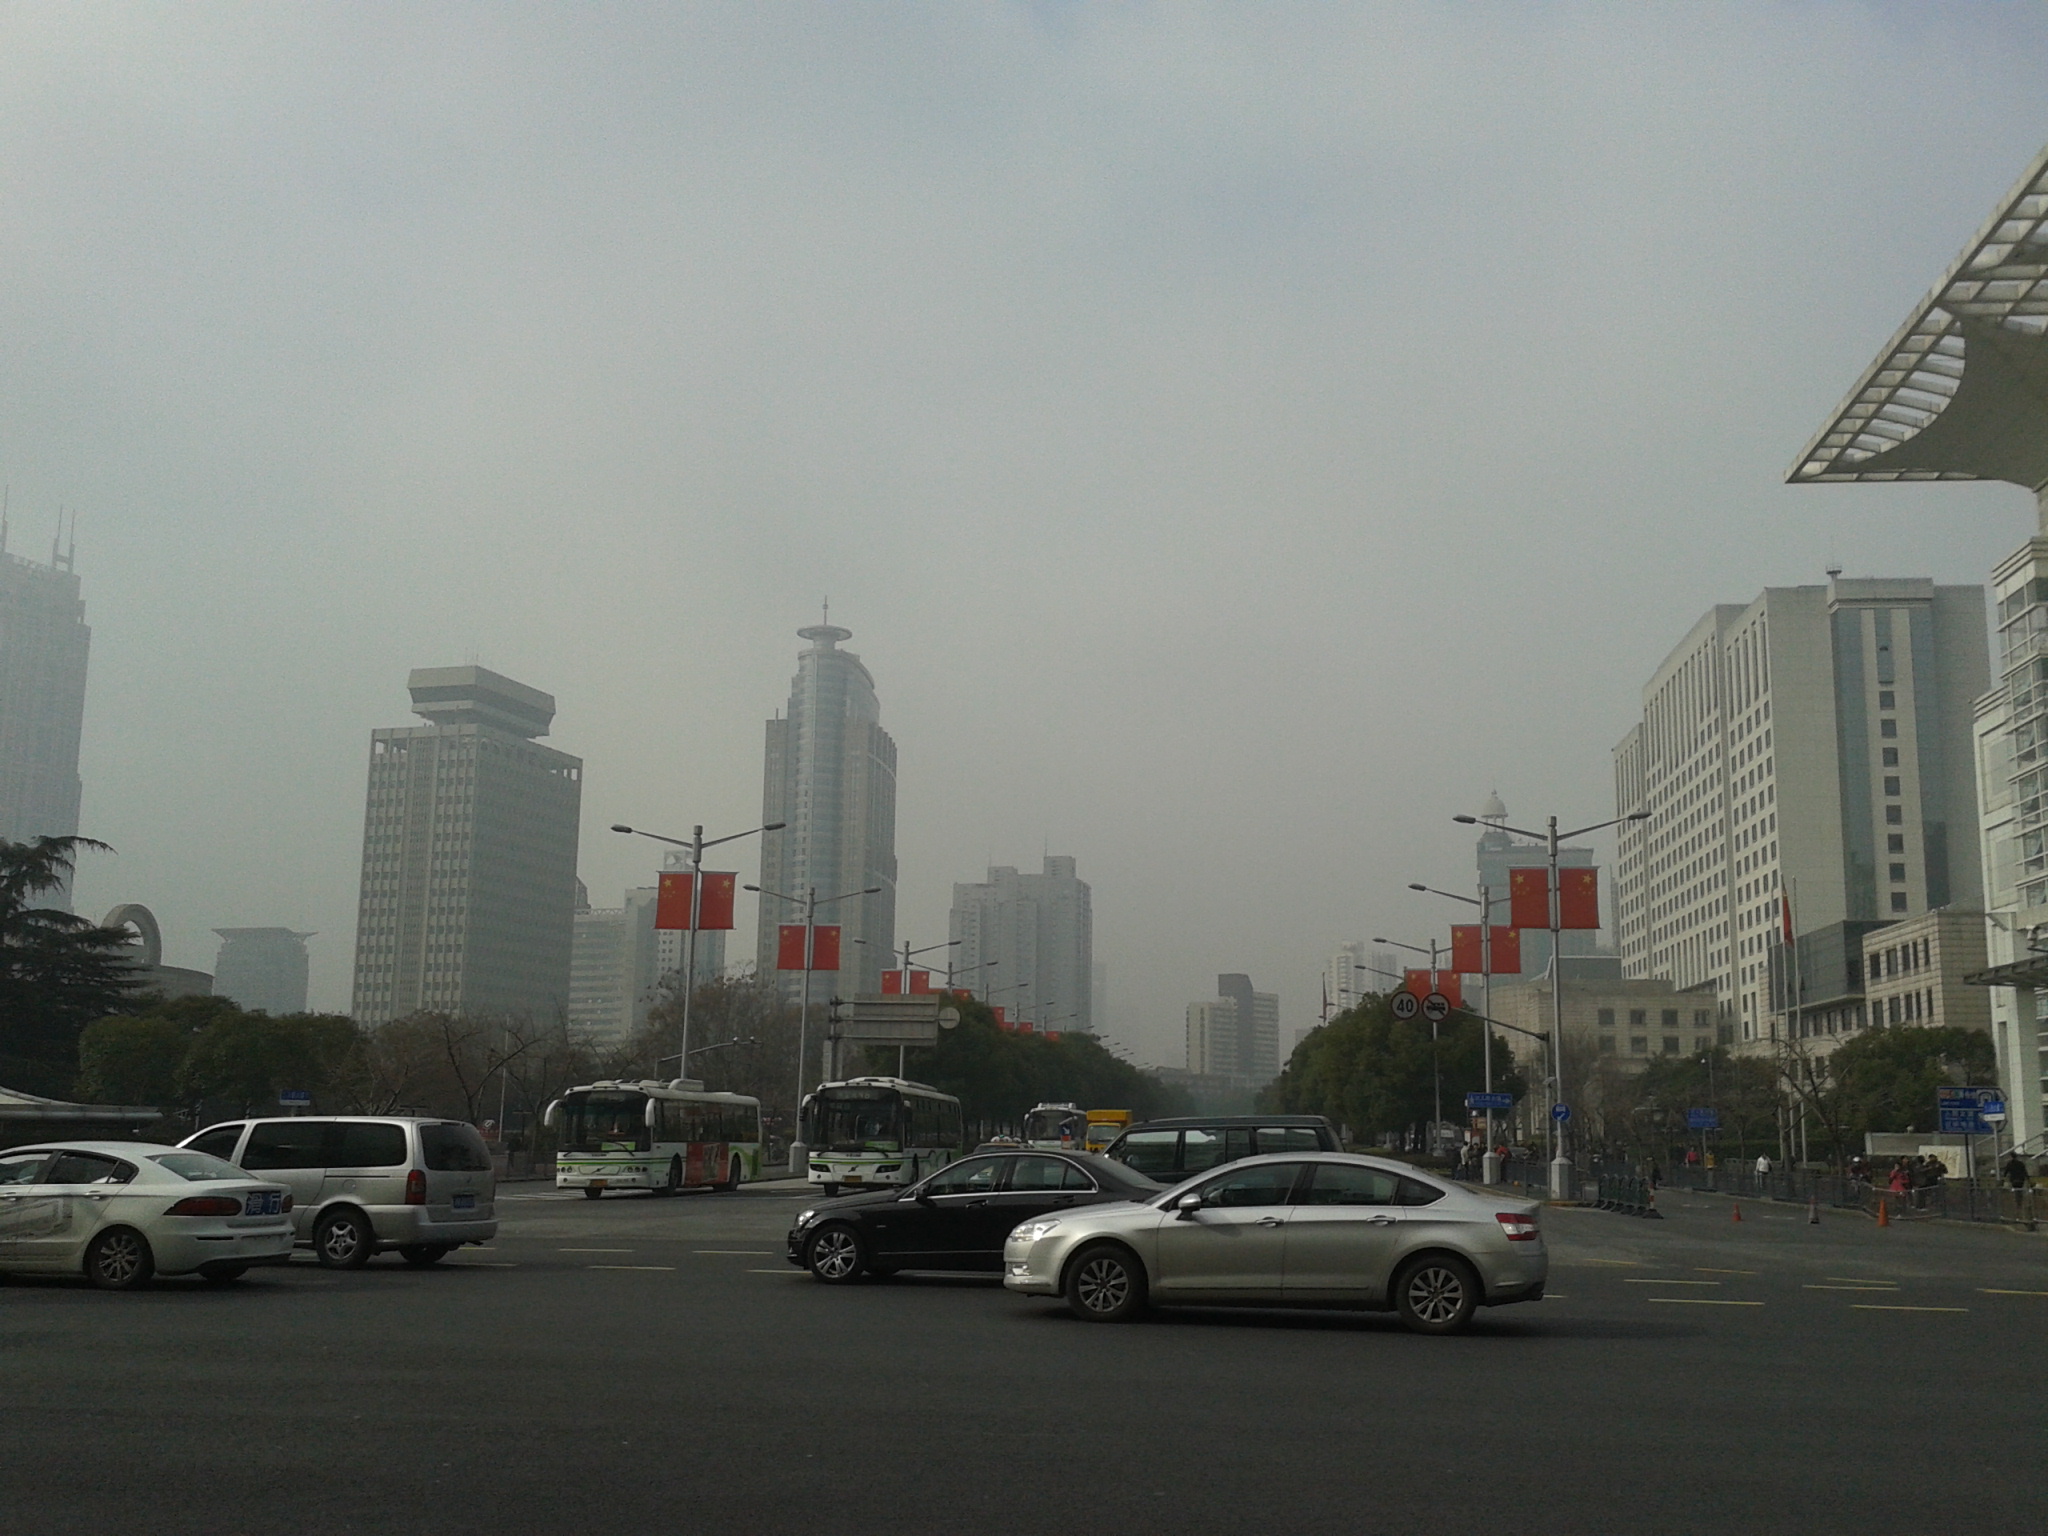 Forgalom	- People’s Avenue (人民大道), Shanghai